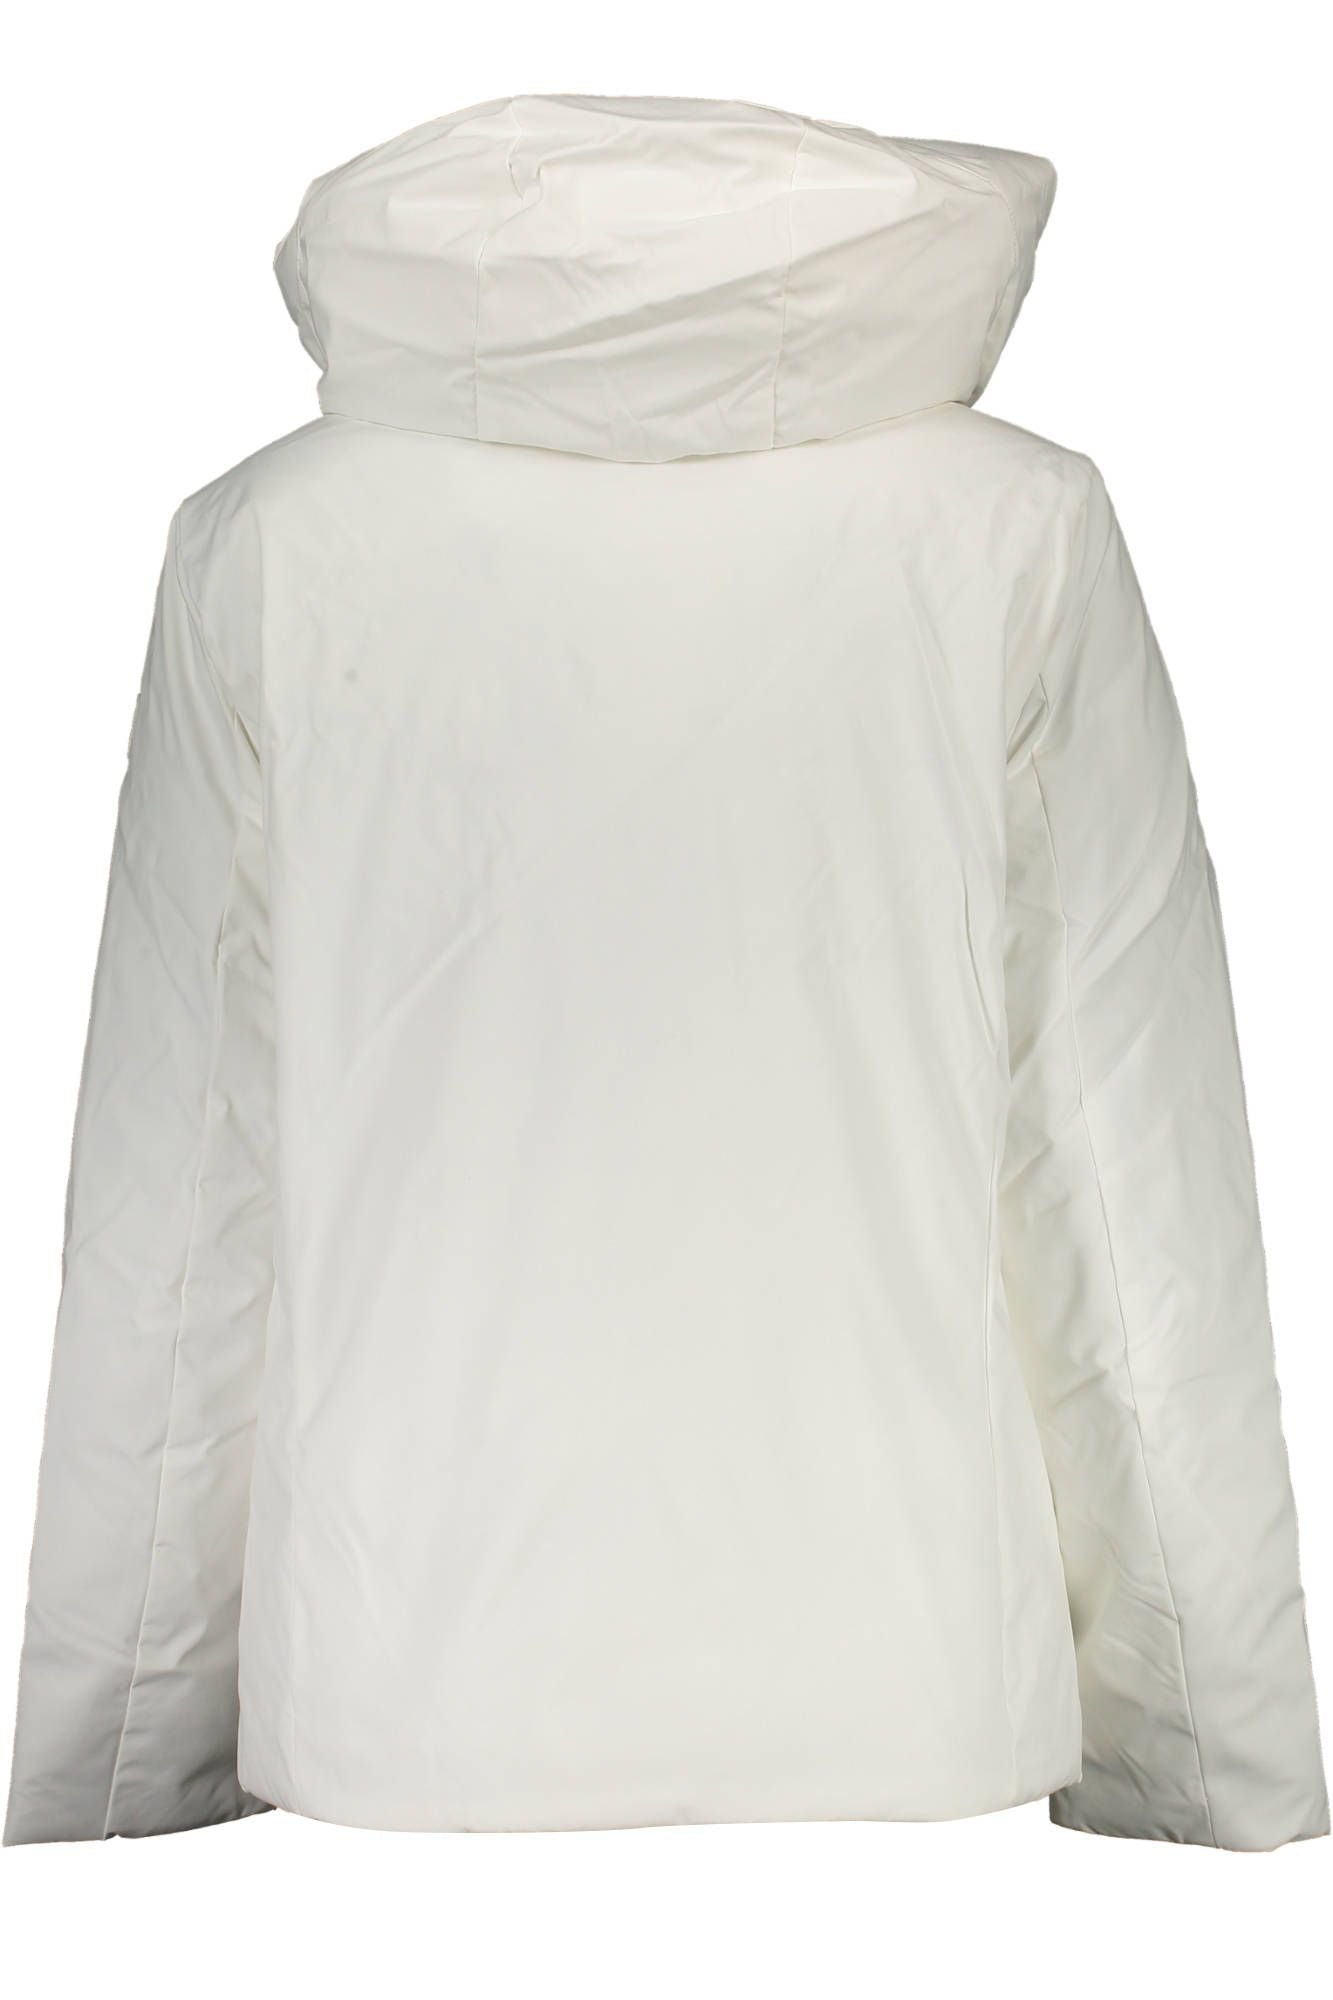 Chic White Hooded Jacket